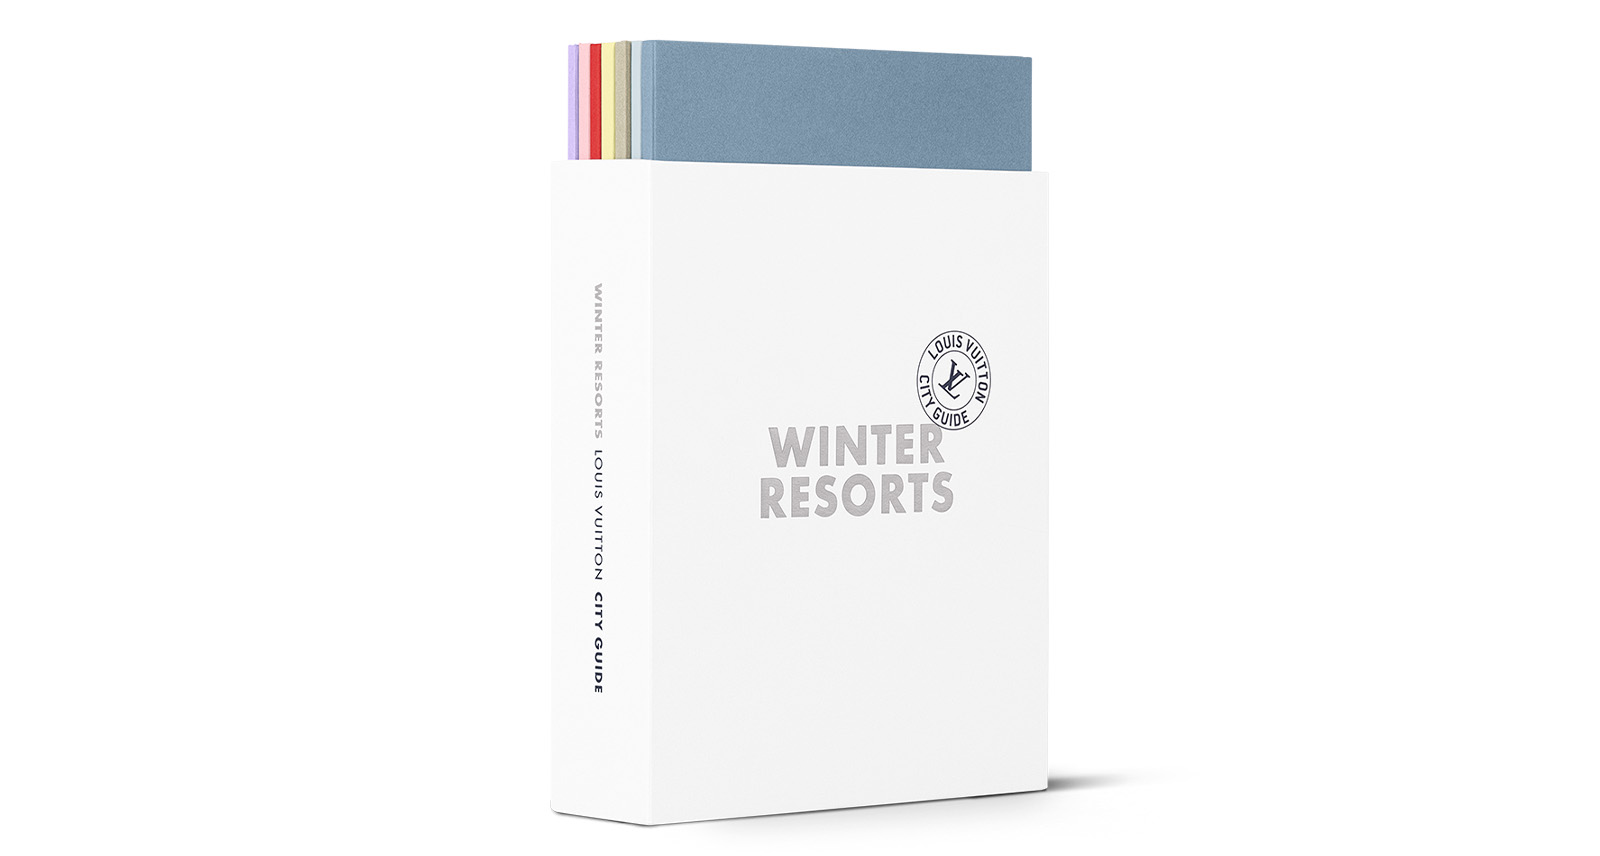 Louis Vuitton Winter City Guide travel book